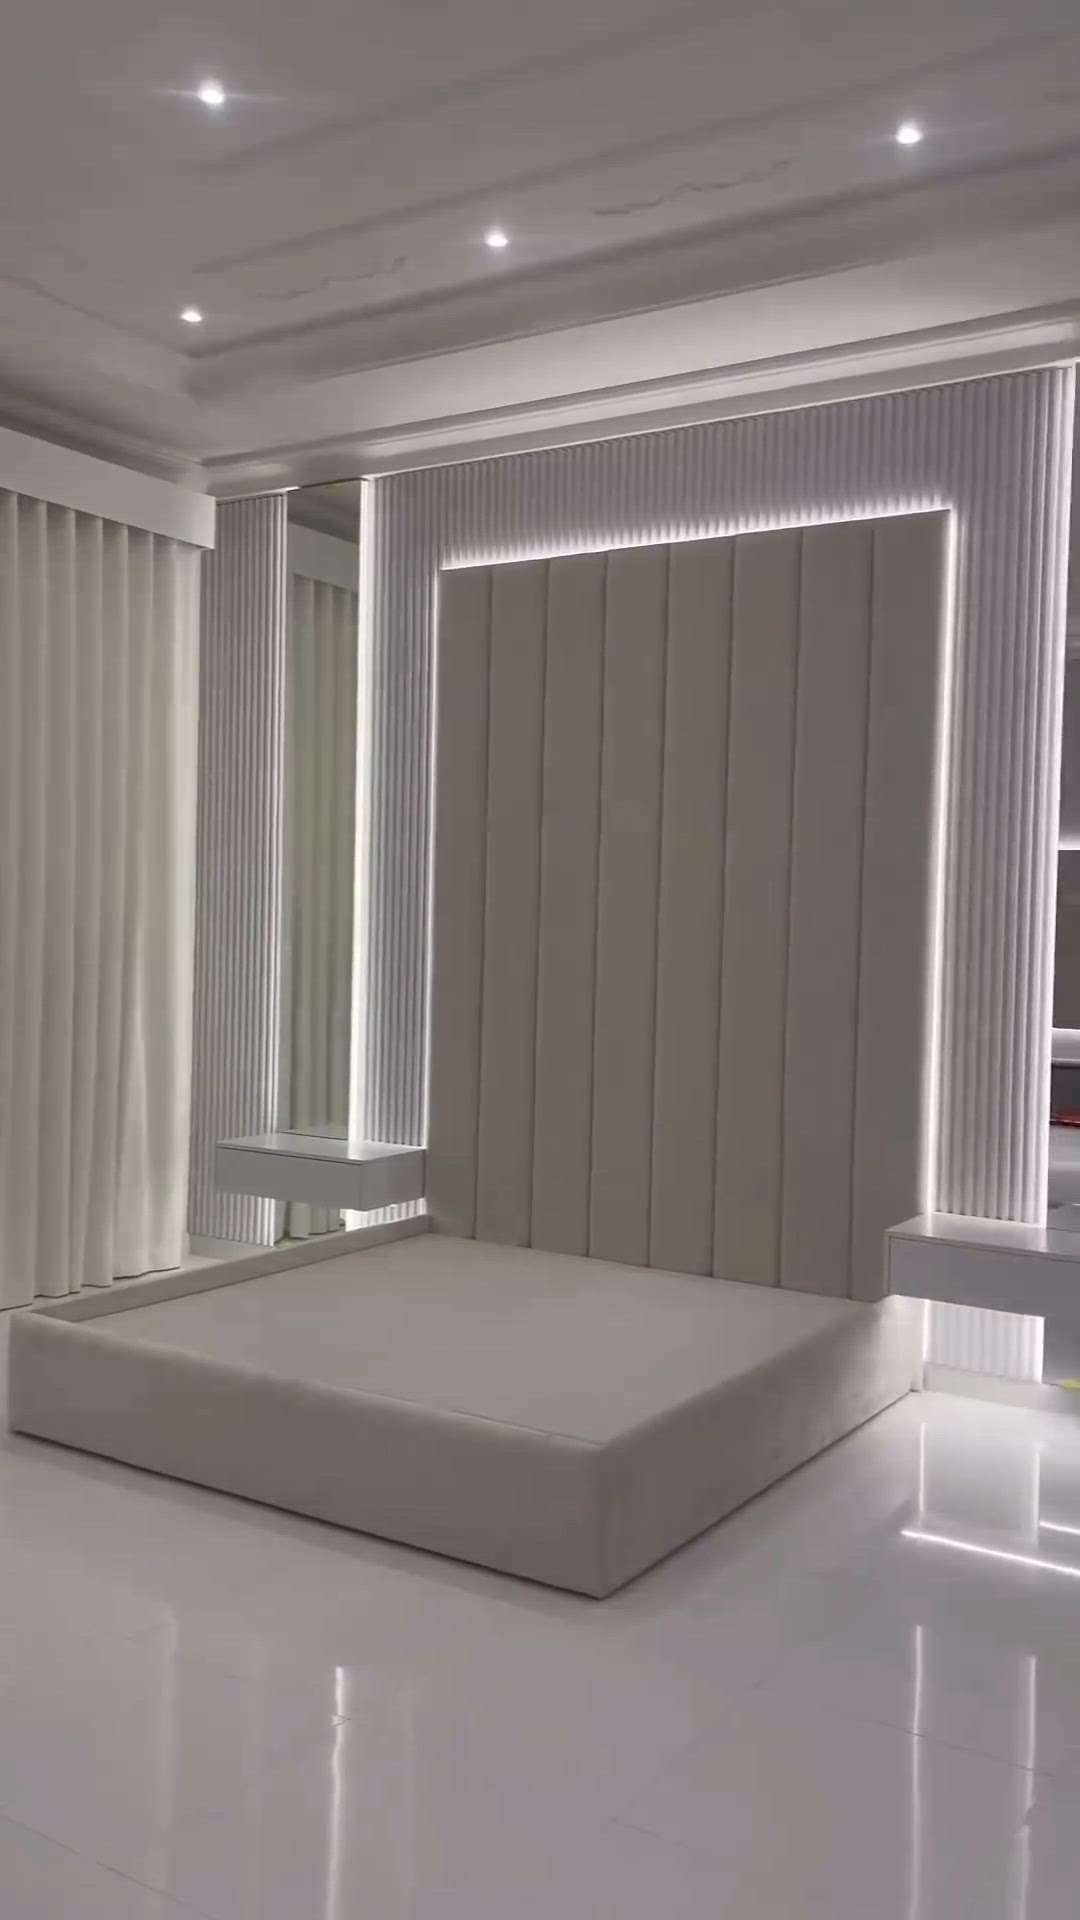 #BedroomDecor  #KingsizeBedroom  #BedroomLighting  #LUXURY_BED  #InteriorDesigner  #HomeDecor